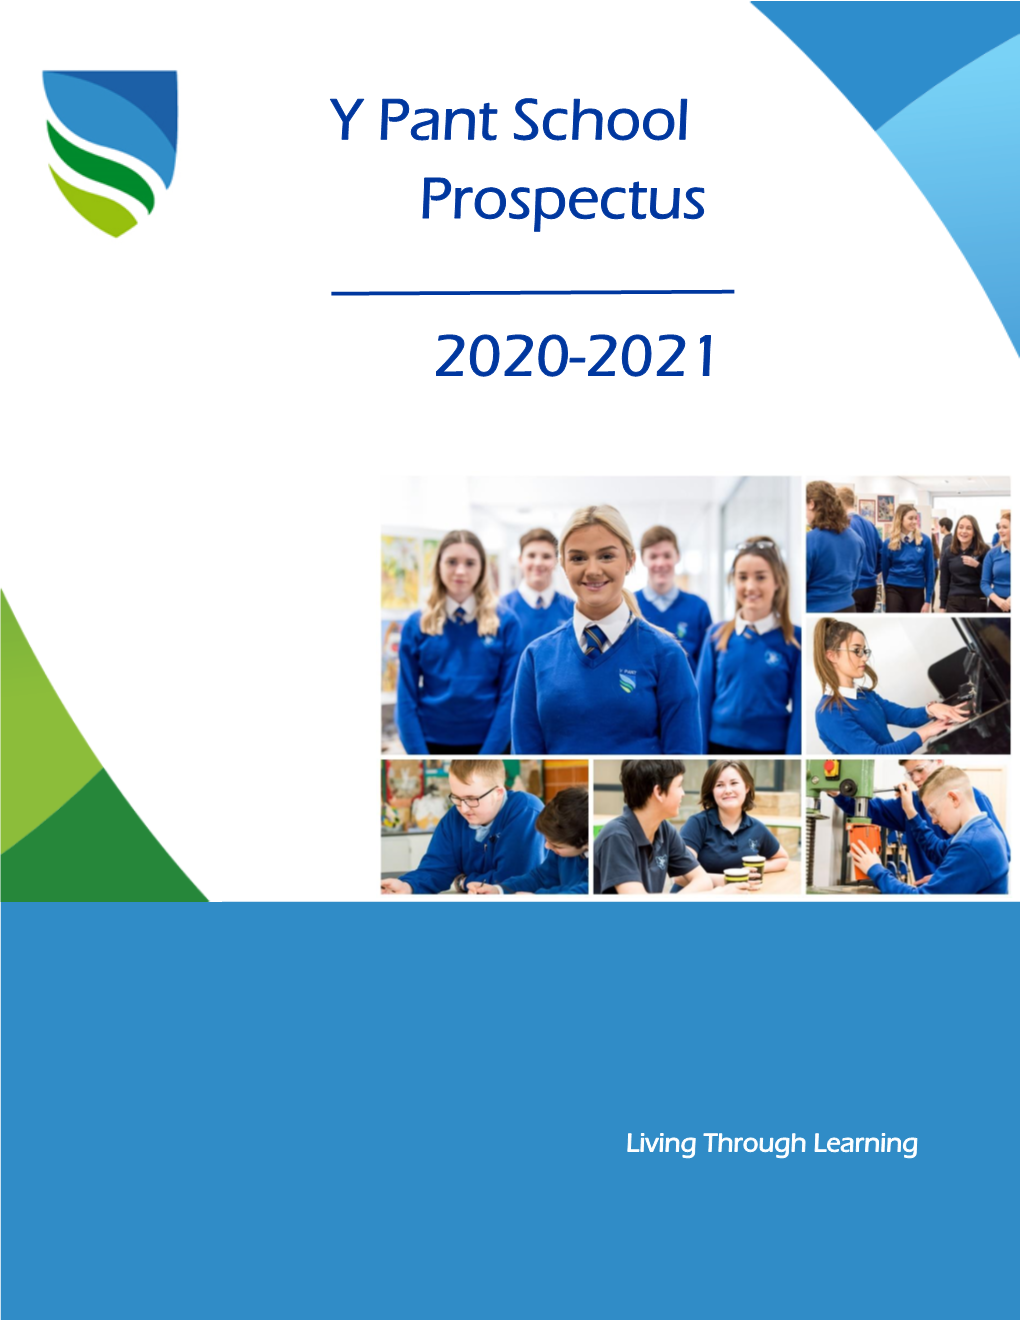 Y Pant School Prospectus 2020-2021